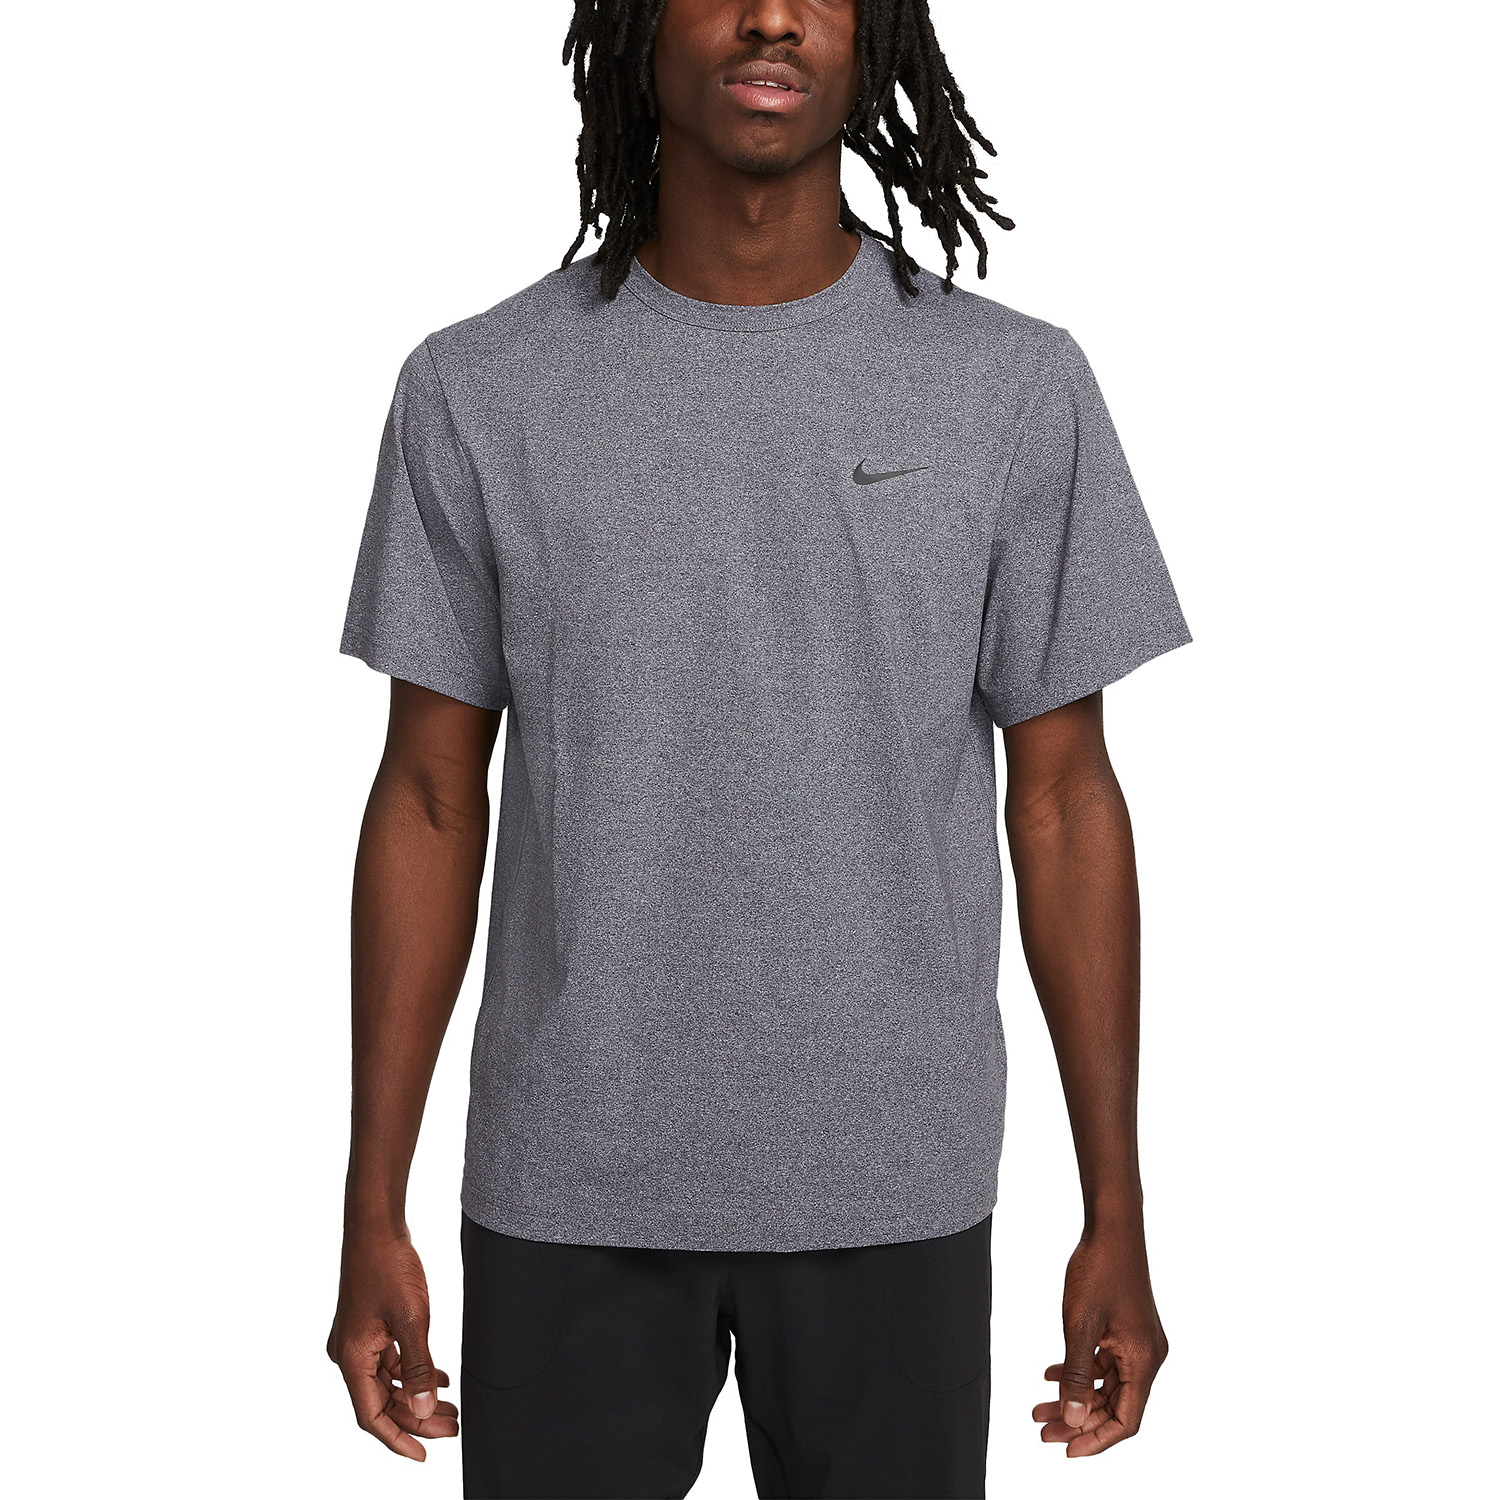 Nike Dri-FIT Hyverse T-Shirt - Obsidian/Heater/Black